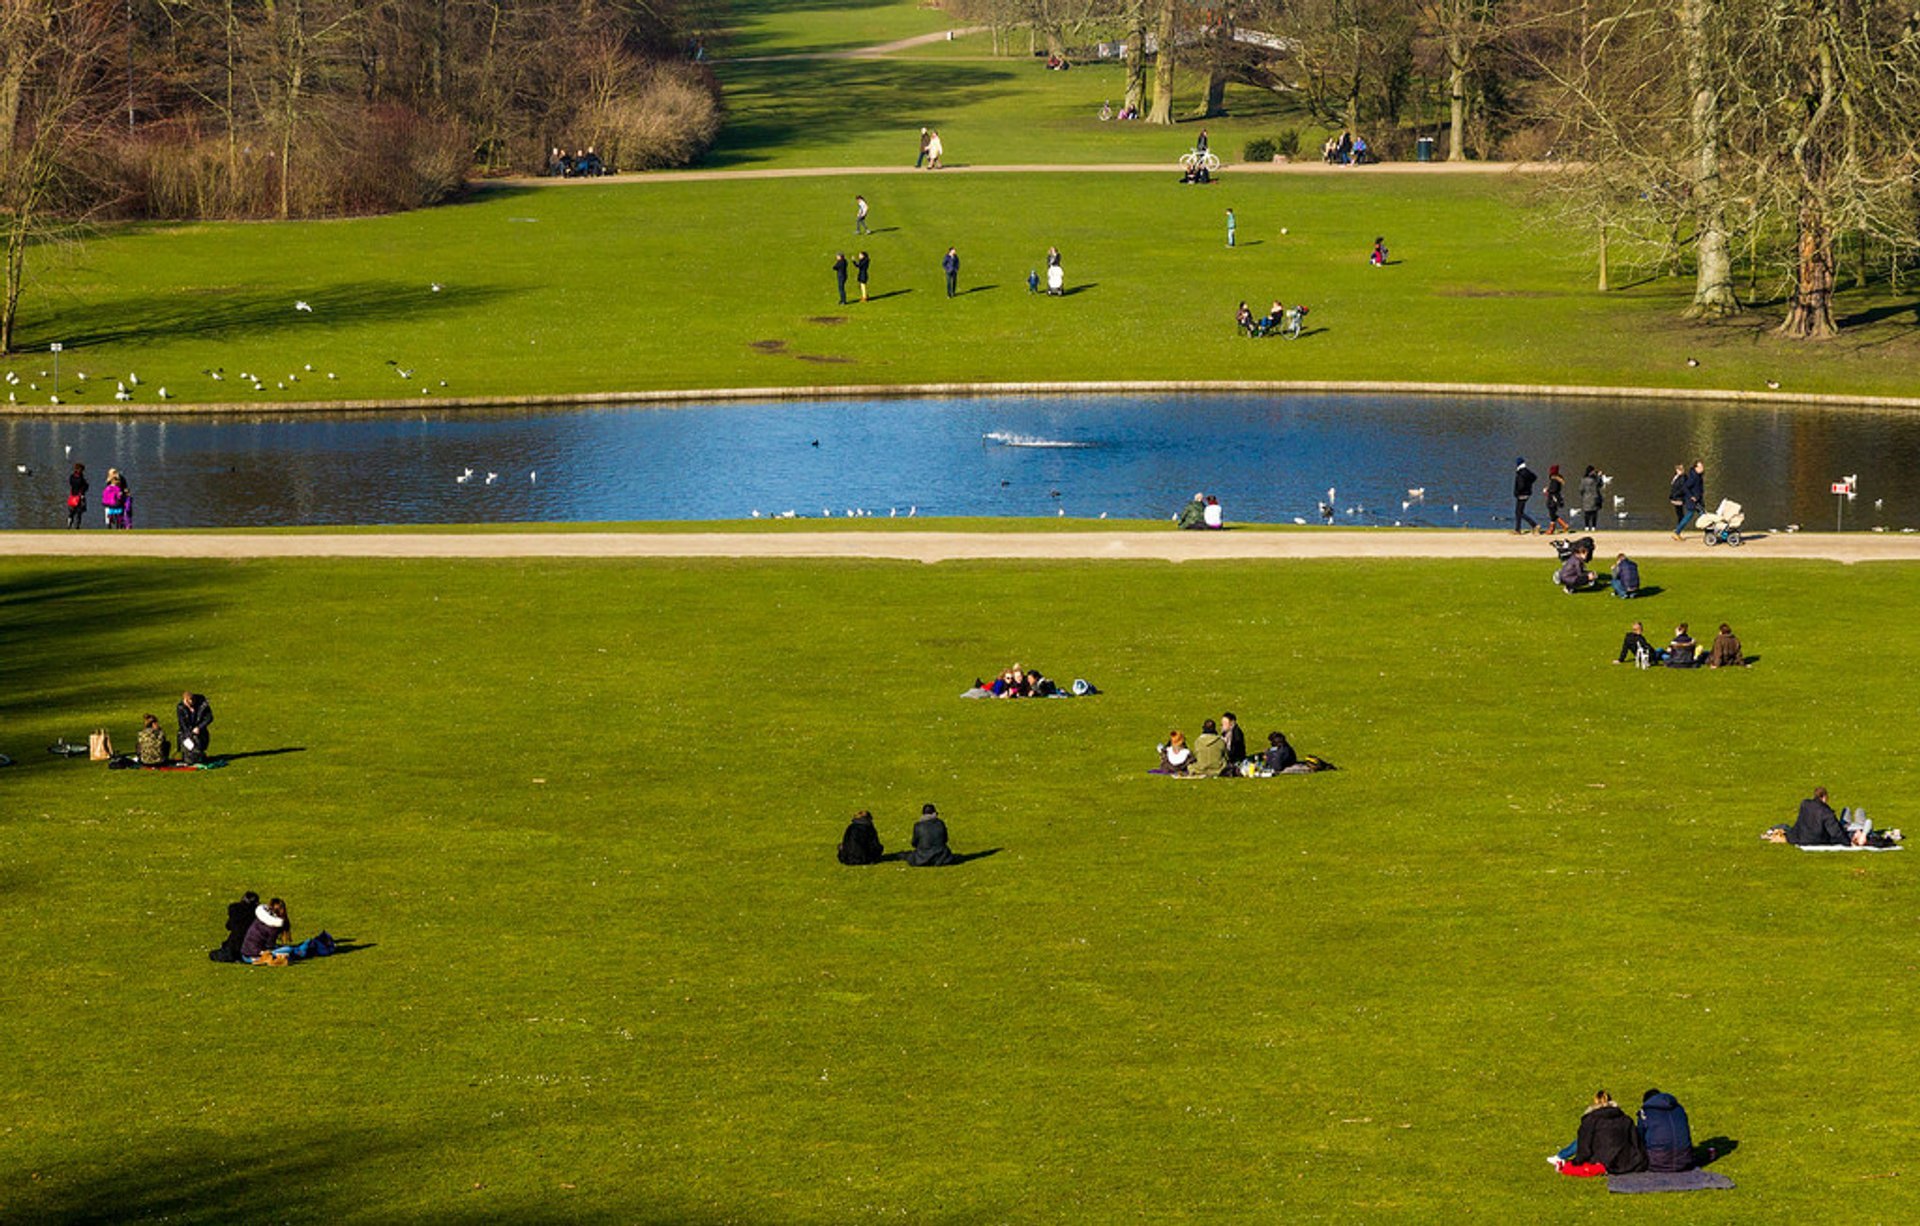 Copenhagen's Parks